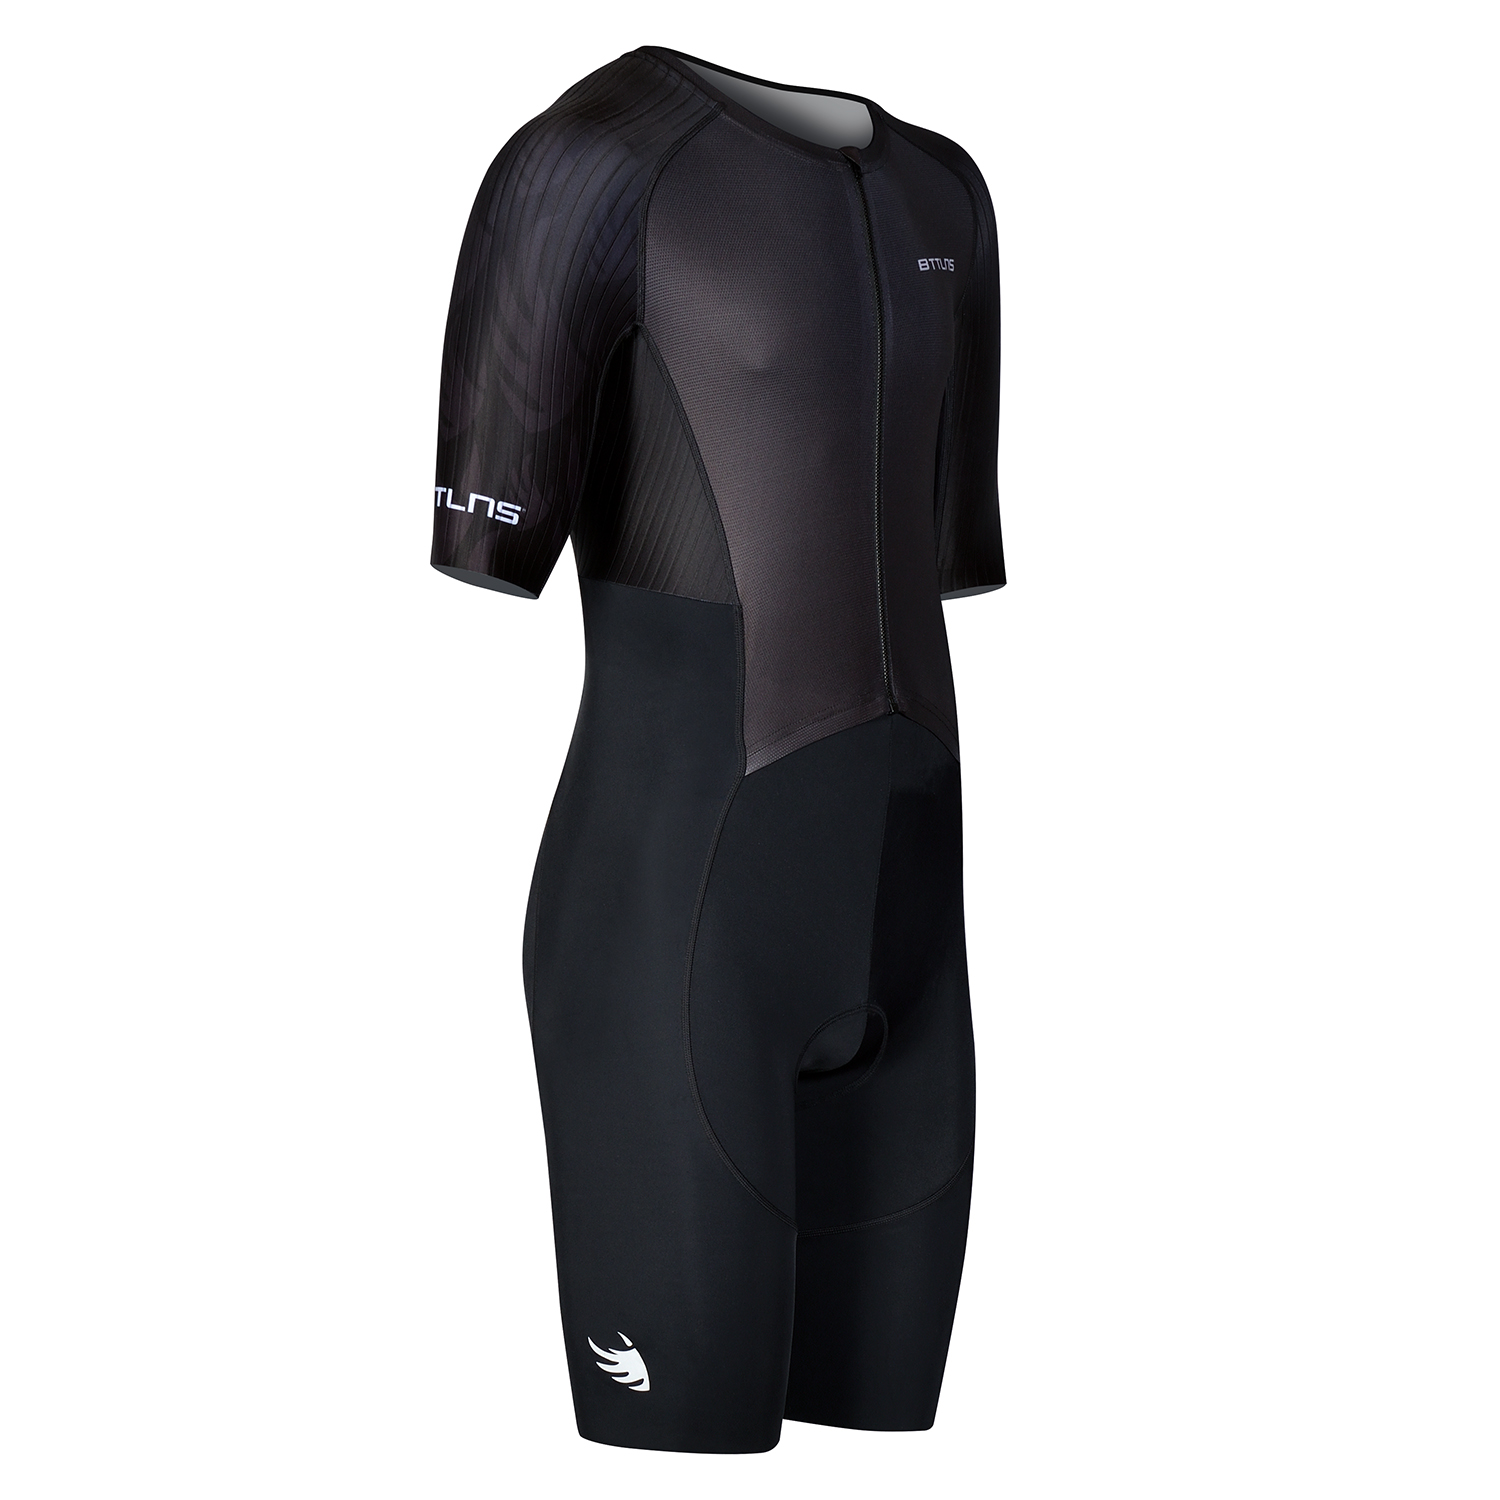 BTTLNS Nemean 1.0 pro aero trisuit short sleeve black Gods  0223001-125